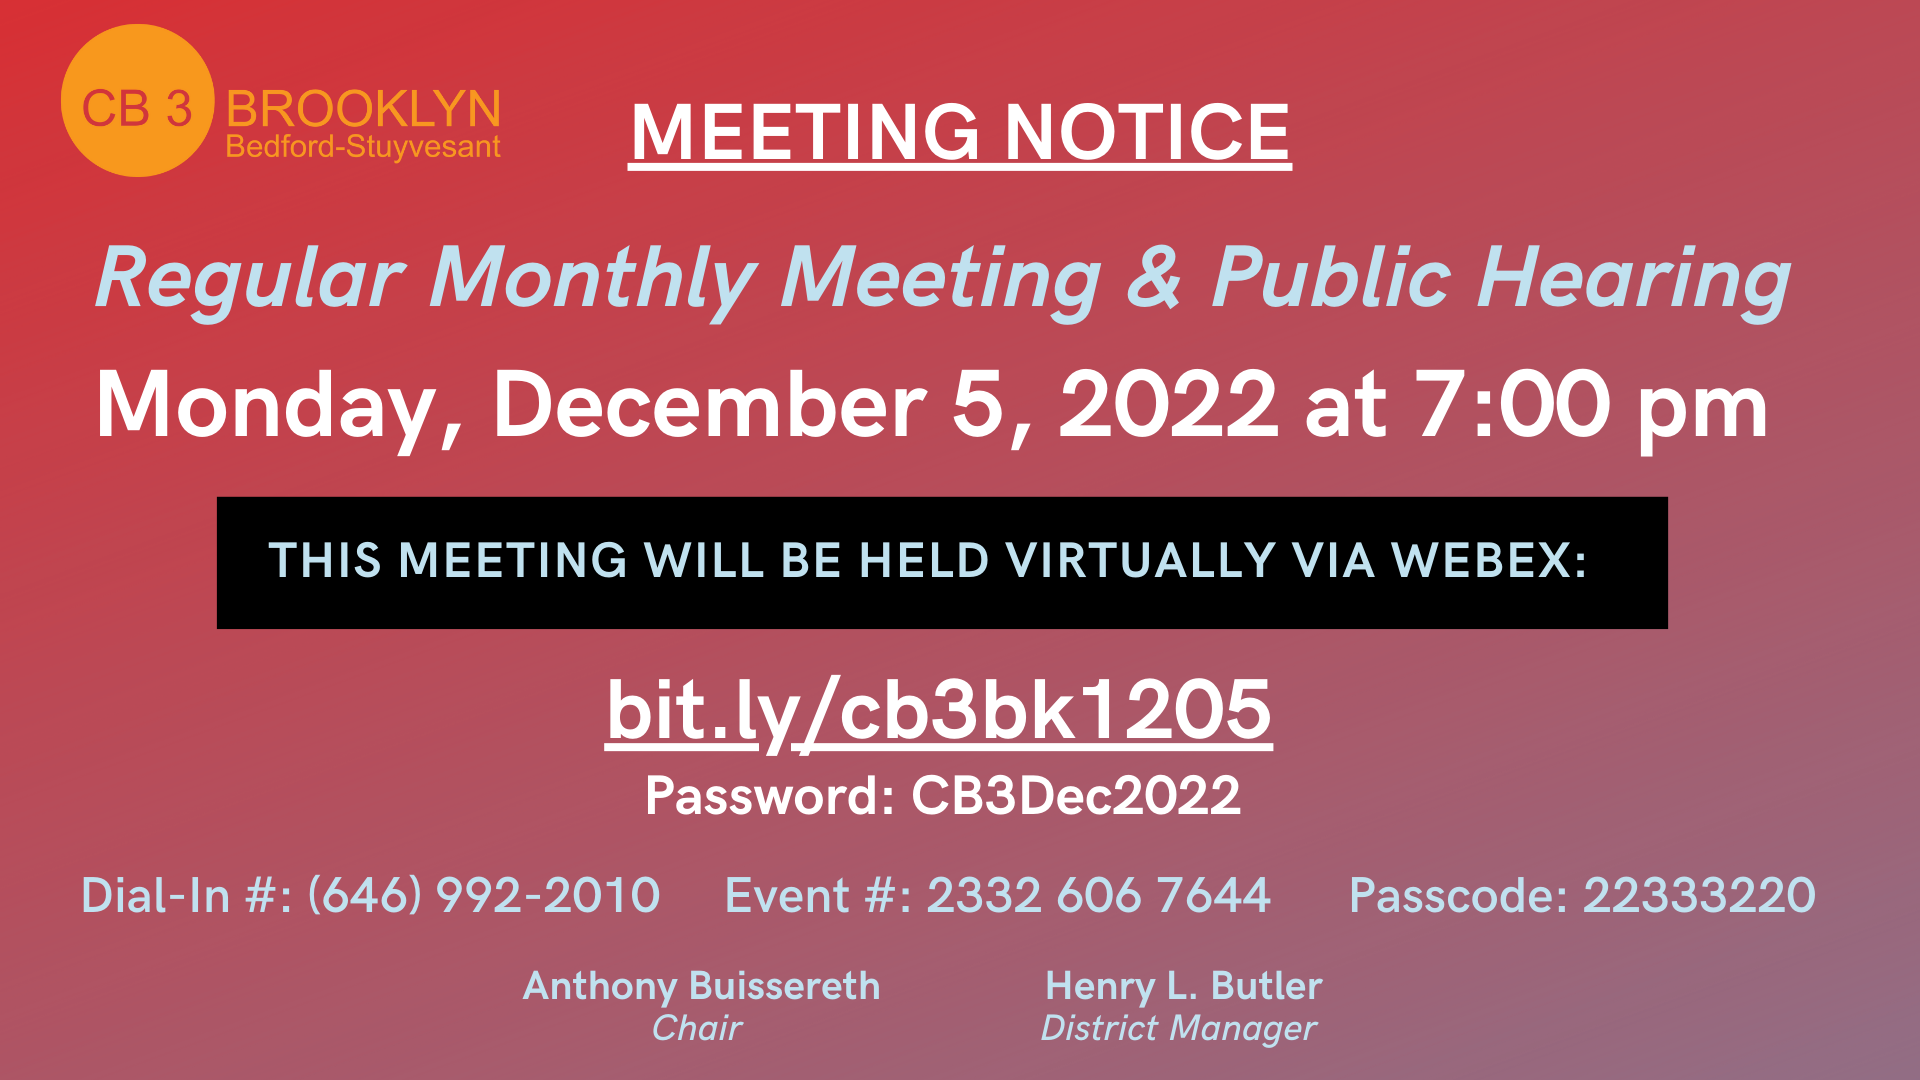 Brooklyn CB 3 Monthly Meeting & Public Hearing 12-20-2022 a7 7pm,  via Webex https://bit.ly/cb3bk1205 Password: CB3Dec2022 